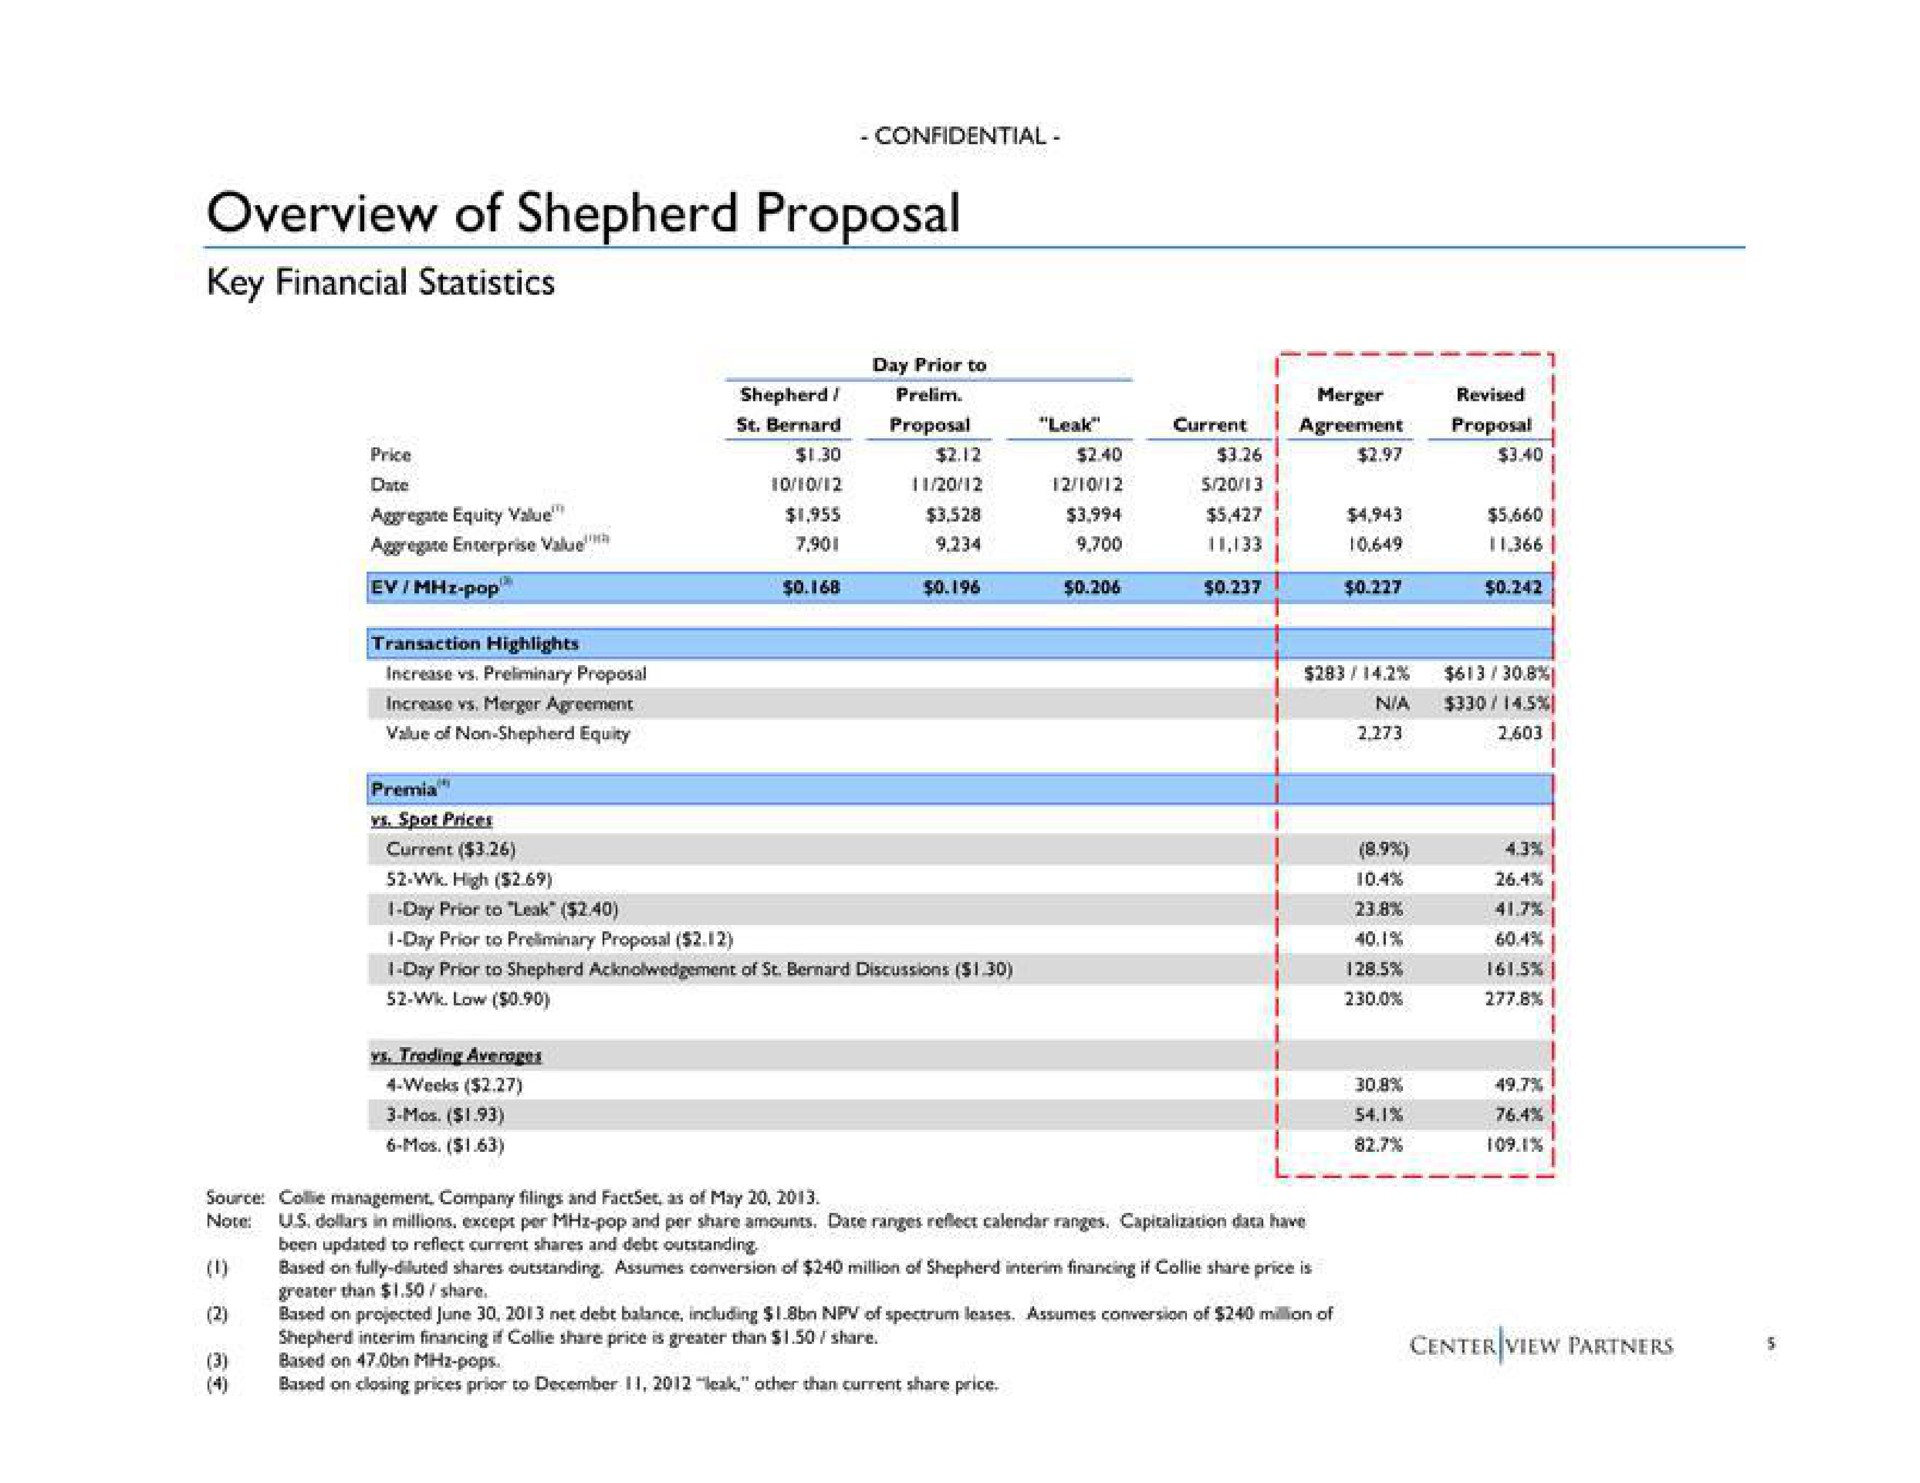 overview of shepherd proposal key financial statistics | Centerview Partners